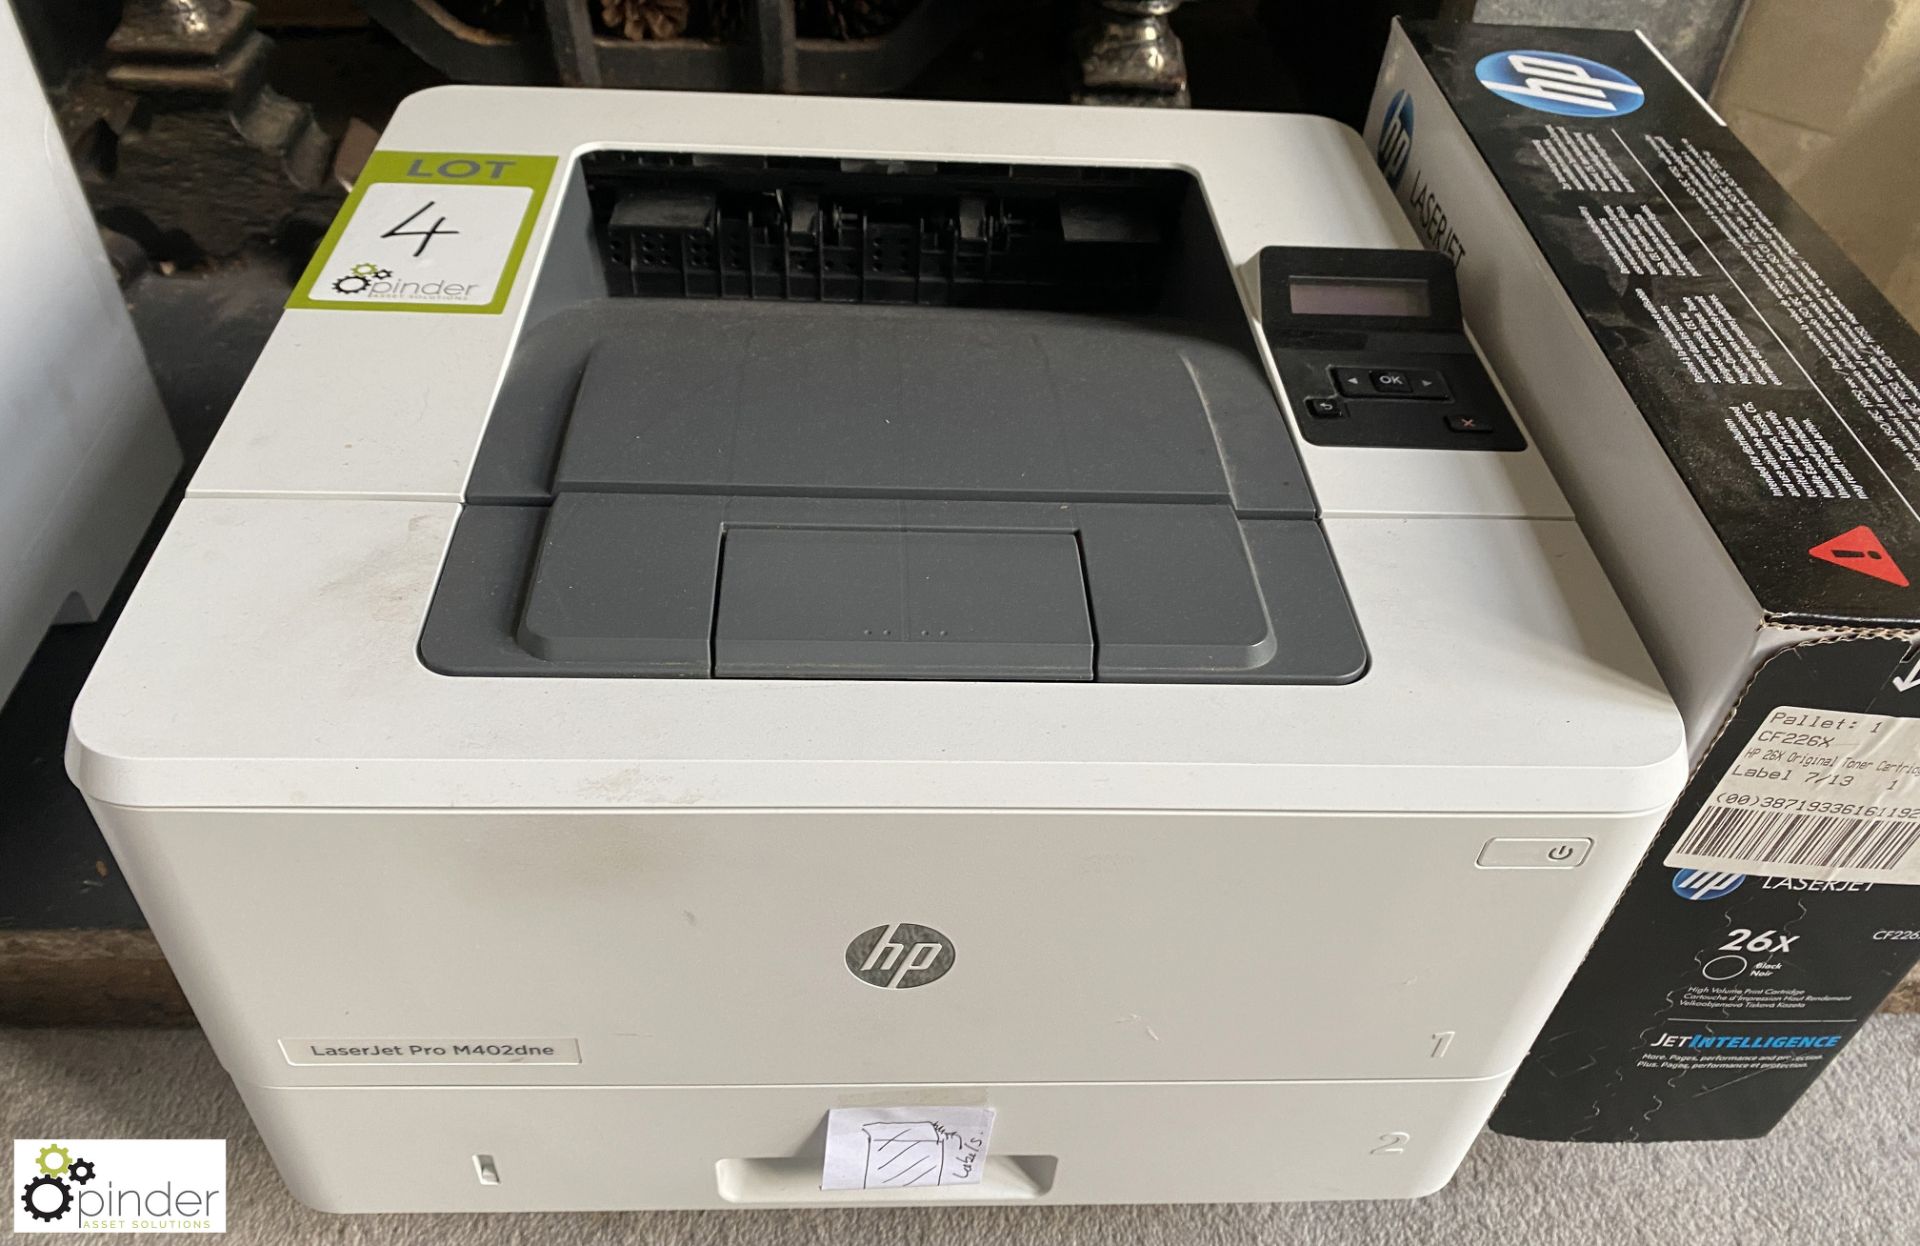 HP Laserjet M402 dne Laser Printer, with CF226X print cartridge, black, boxed and unused ( - Image 2 of 4